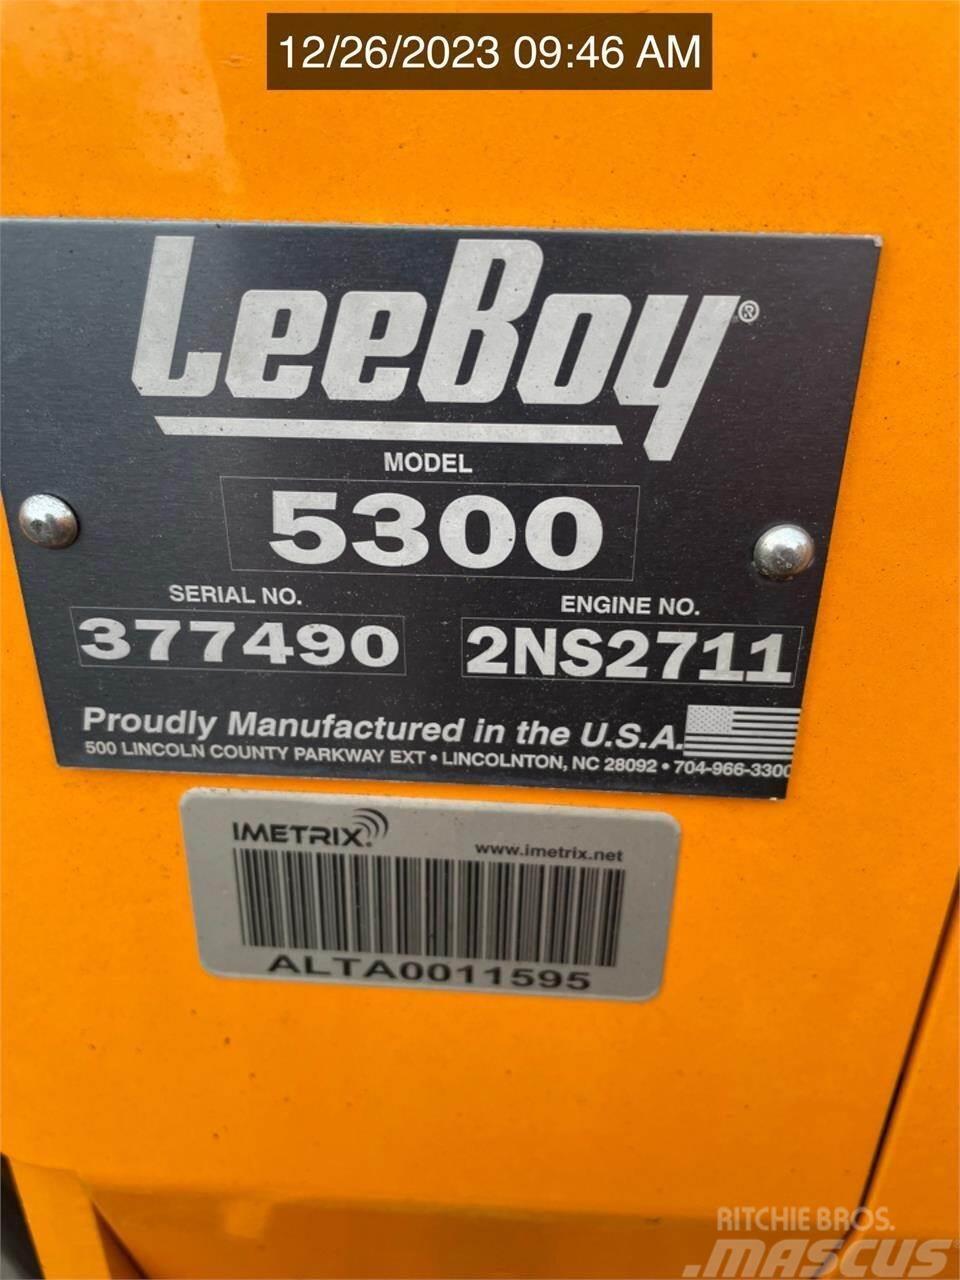 LeeBoy 5300 Finitrici